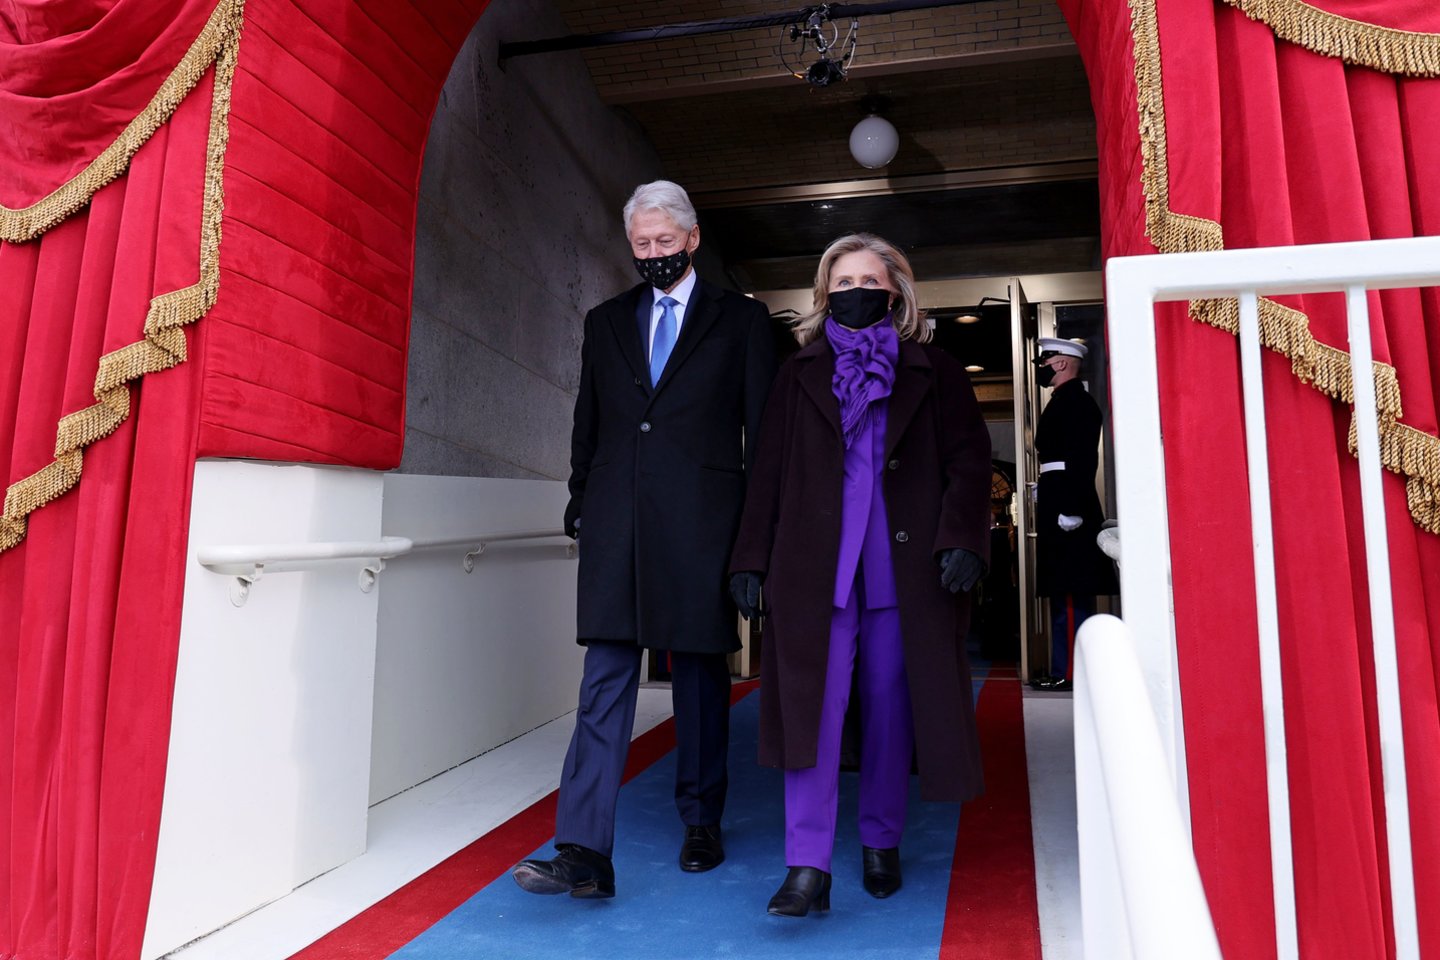  Billas Clintonas su žmona Hillary.<br> Scanpix nuotr.